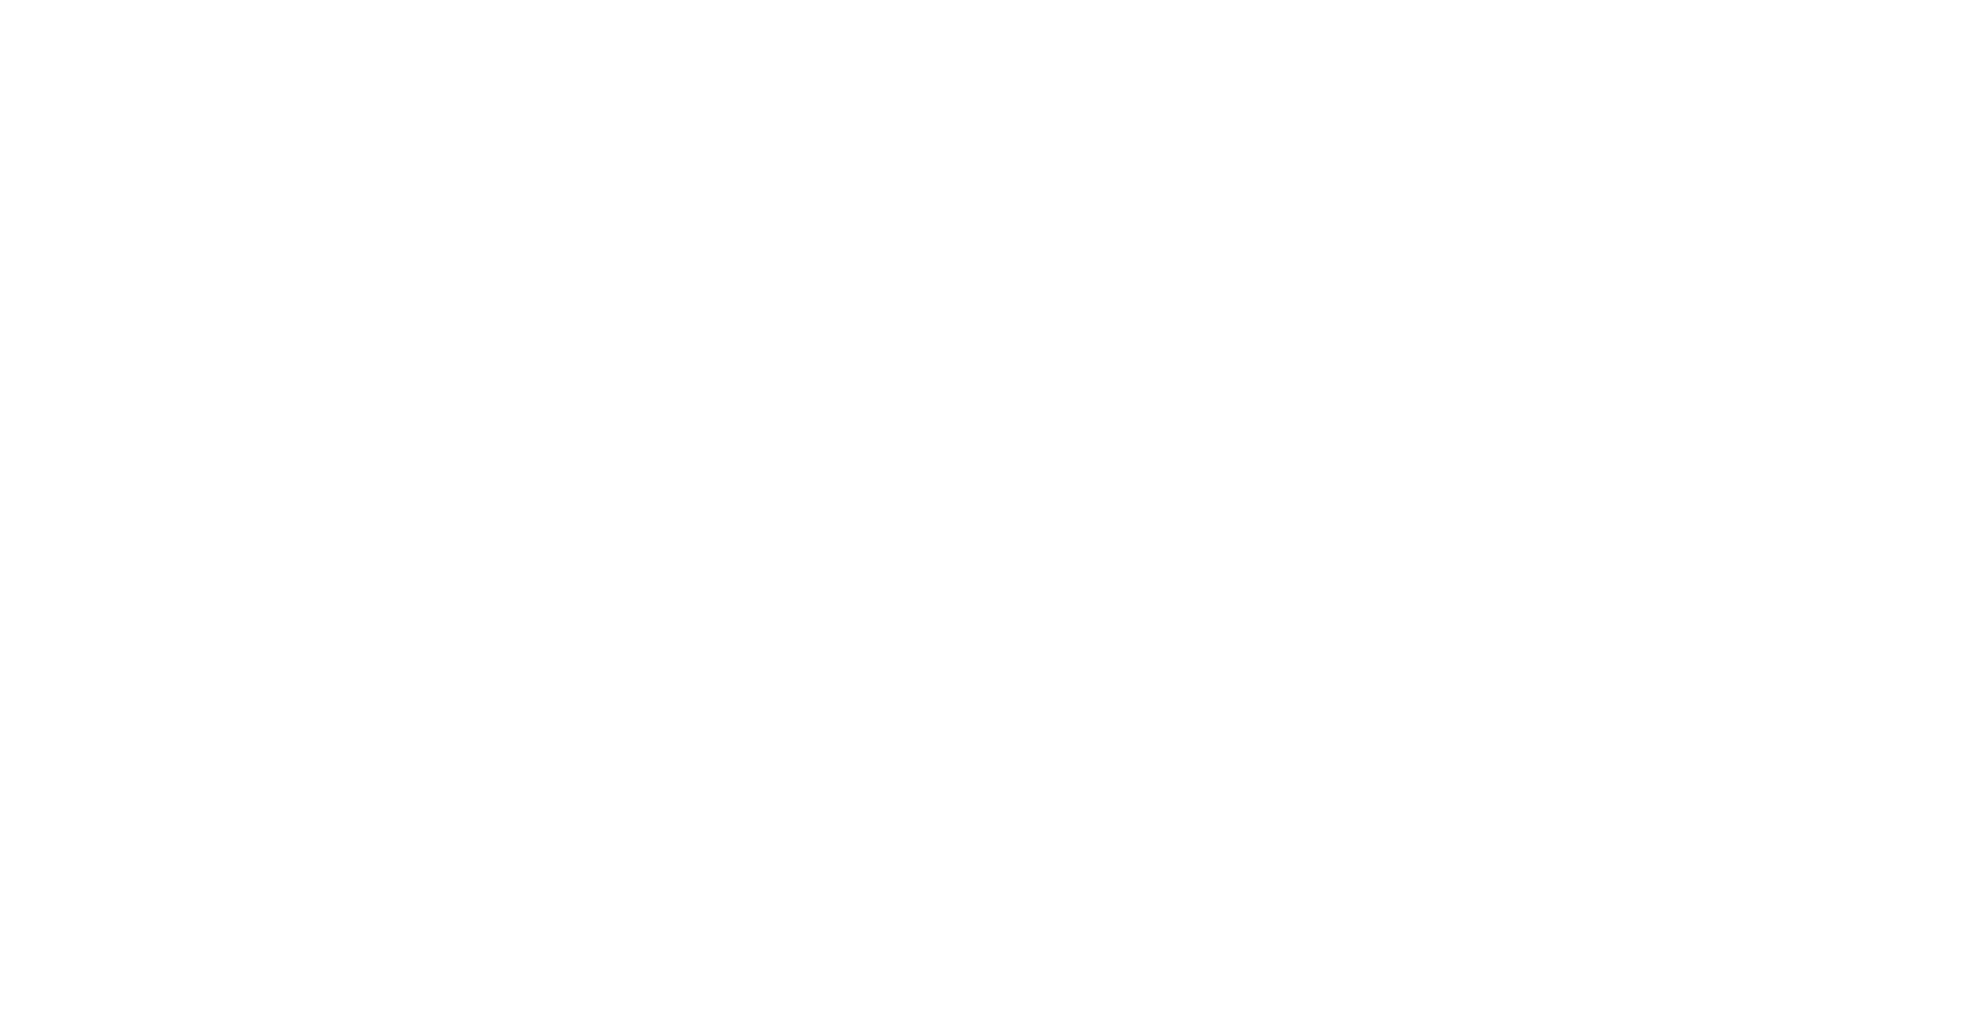 The Village Explainer